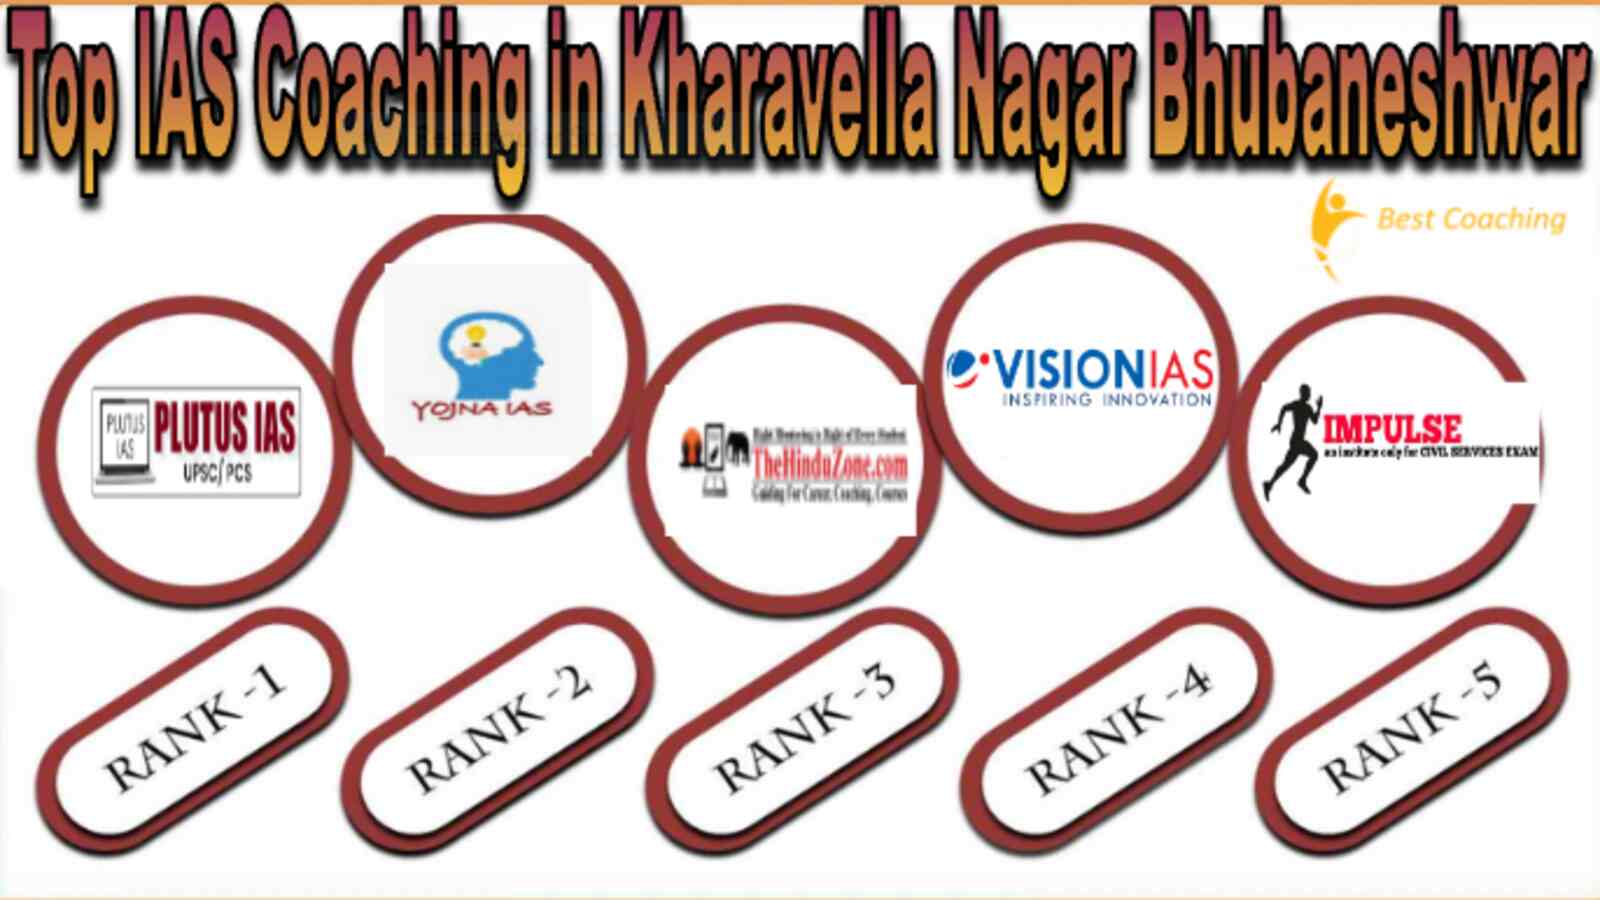 Remove term: Top IAS coaching in Kharevella Nagar Bhubaneshwar. Top IAS coaching in Kharevella Nagar Bhubaneshwar